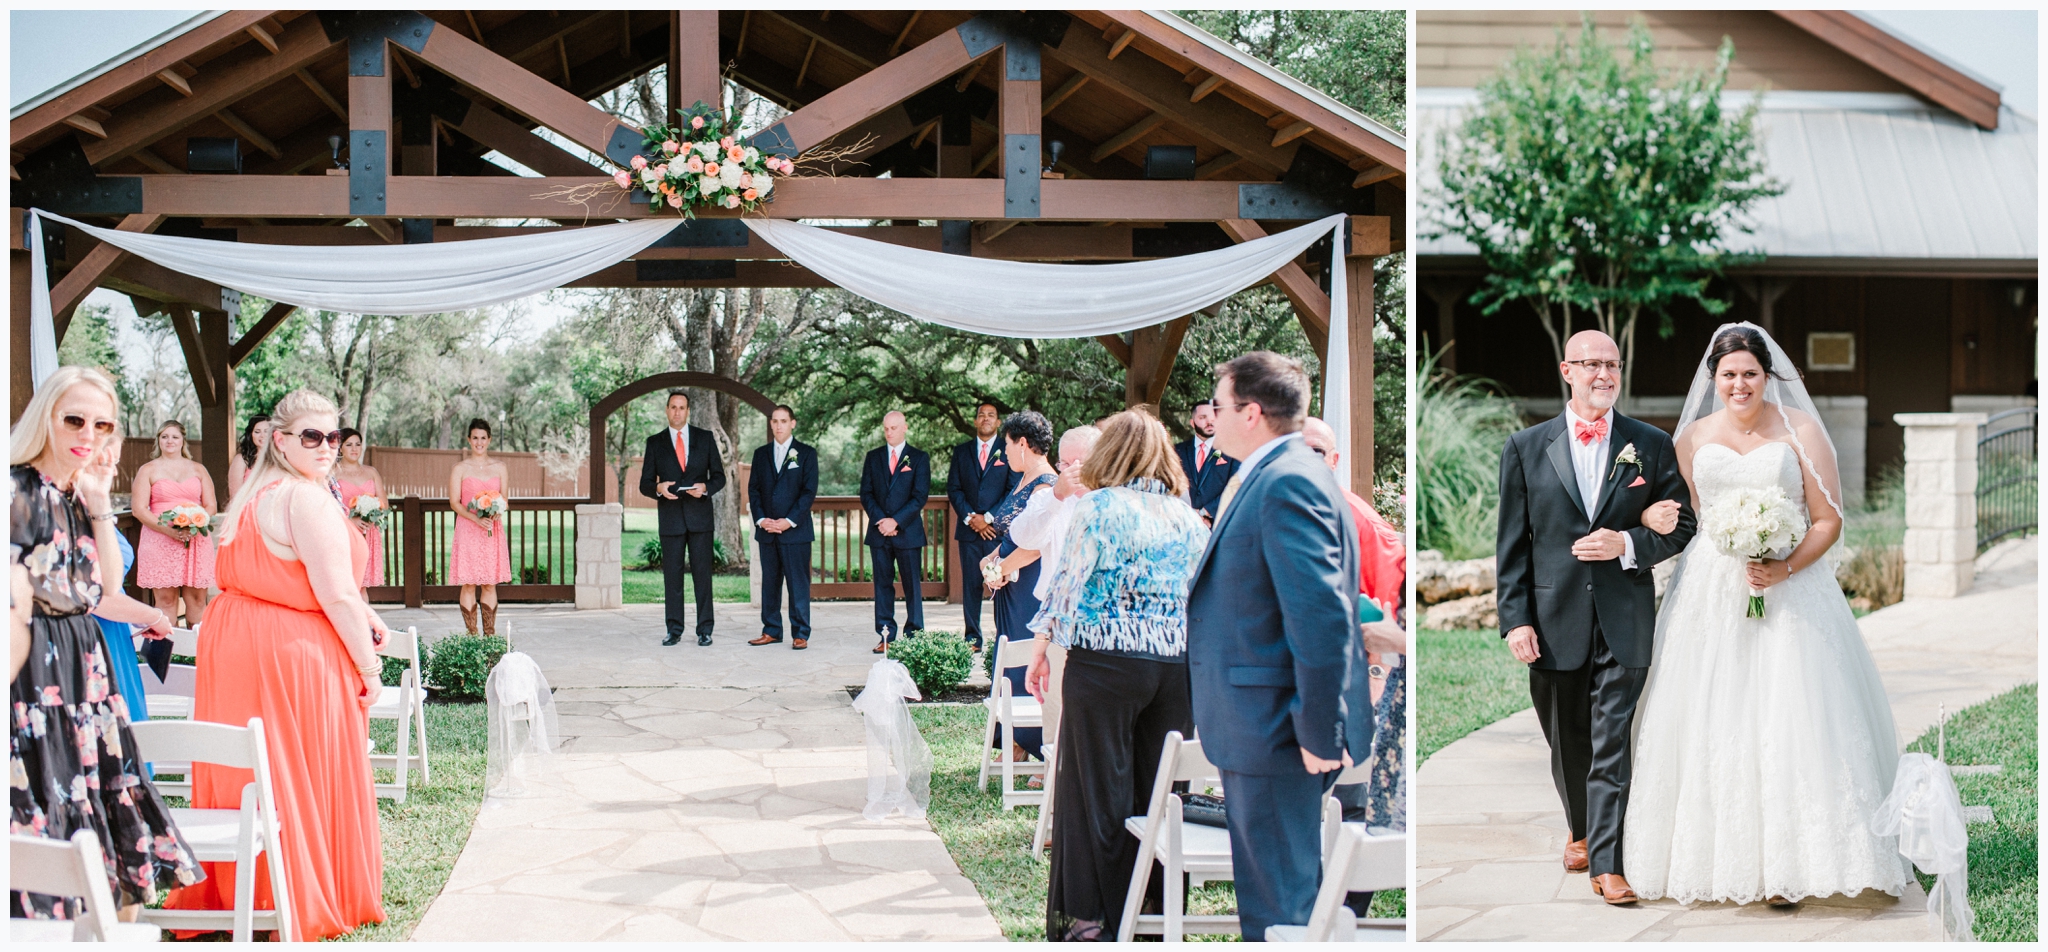 joslyn-holtfort-photography-austin-texas-wedding-the-union-on-eighth-georgetown_0019